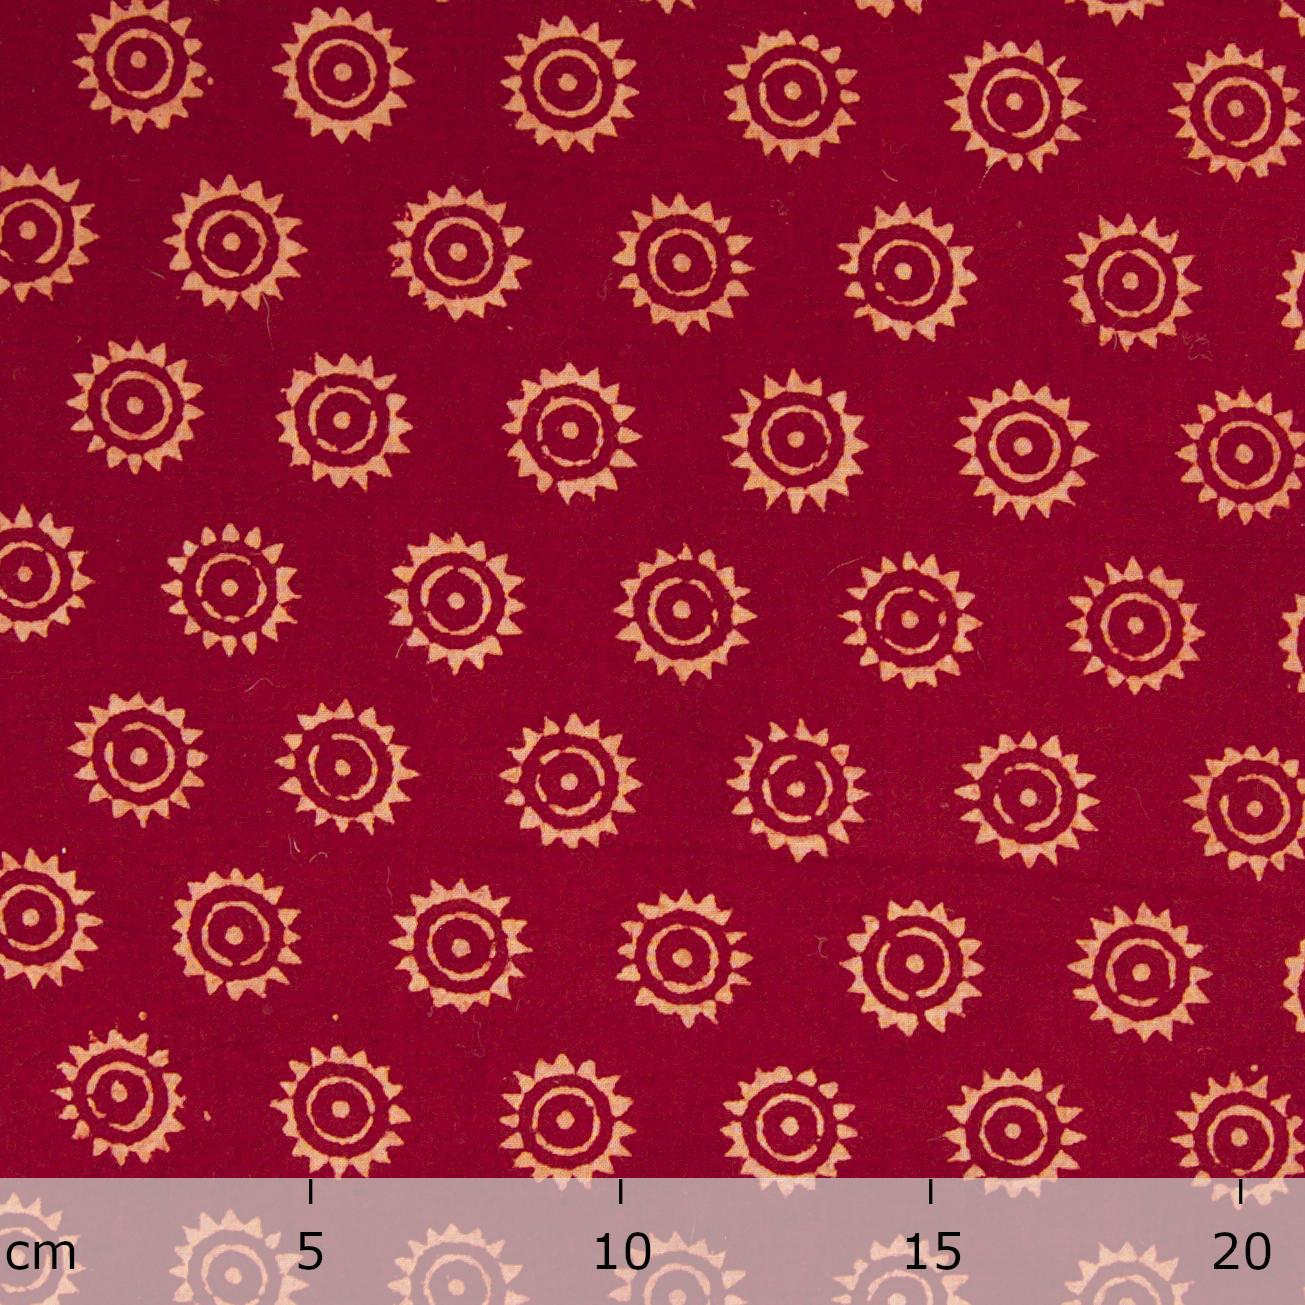 Block Printed Fabric, 100% Cotton, Ajrak Design: Red Base, Beige Sun. Ruler